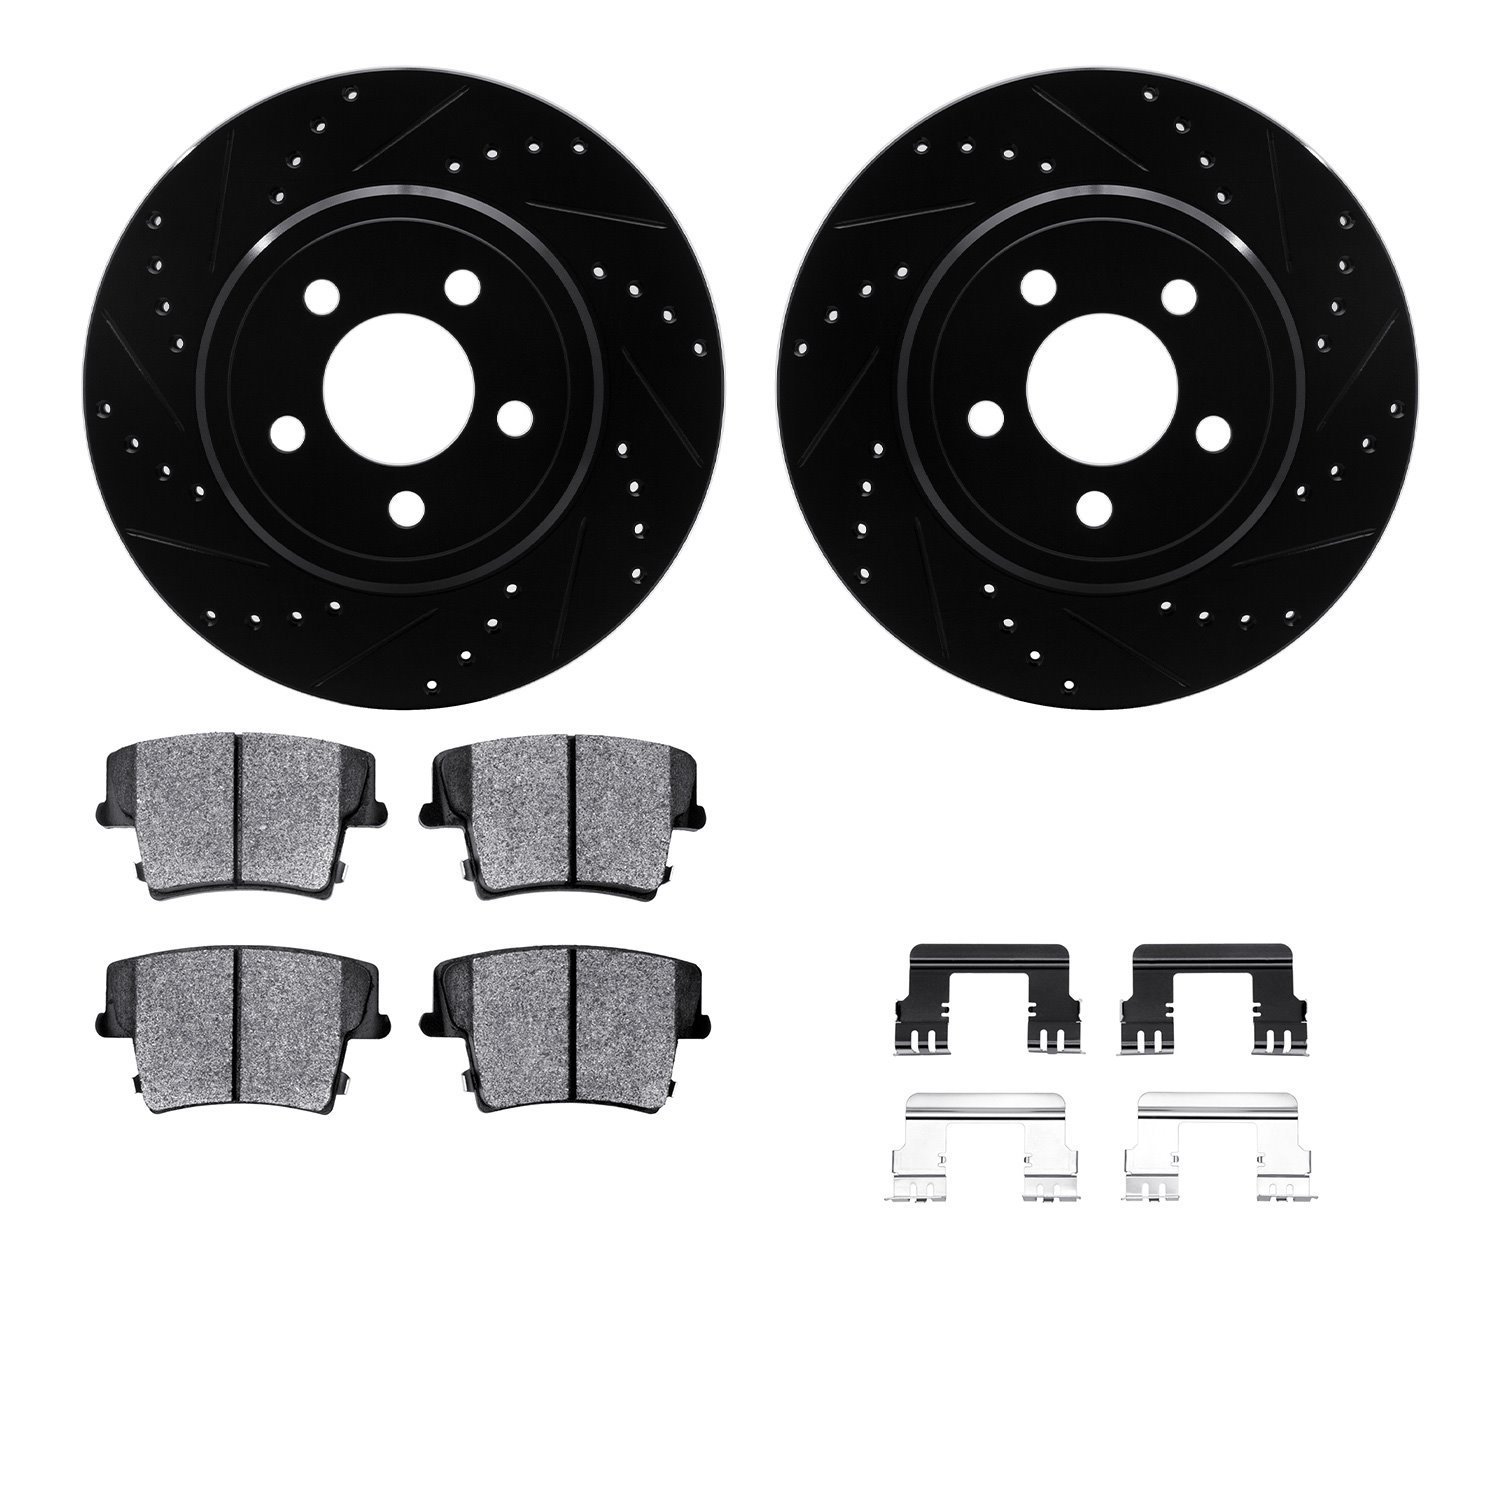 8312-39036 Drilled/Slotted Brake Rotors with 3000-Series Ceramic Brake Pads Kit & Hardware [Black], Fits Select Mopar, Position: